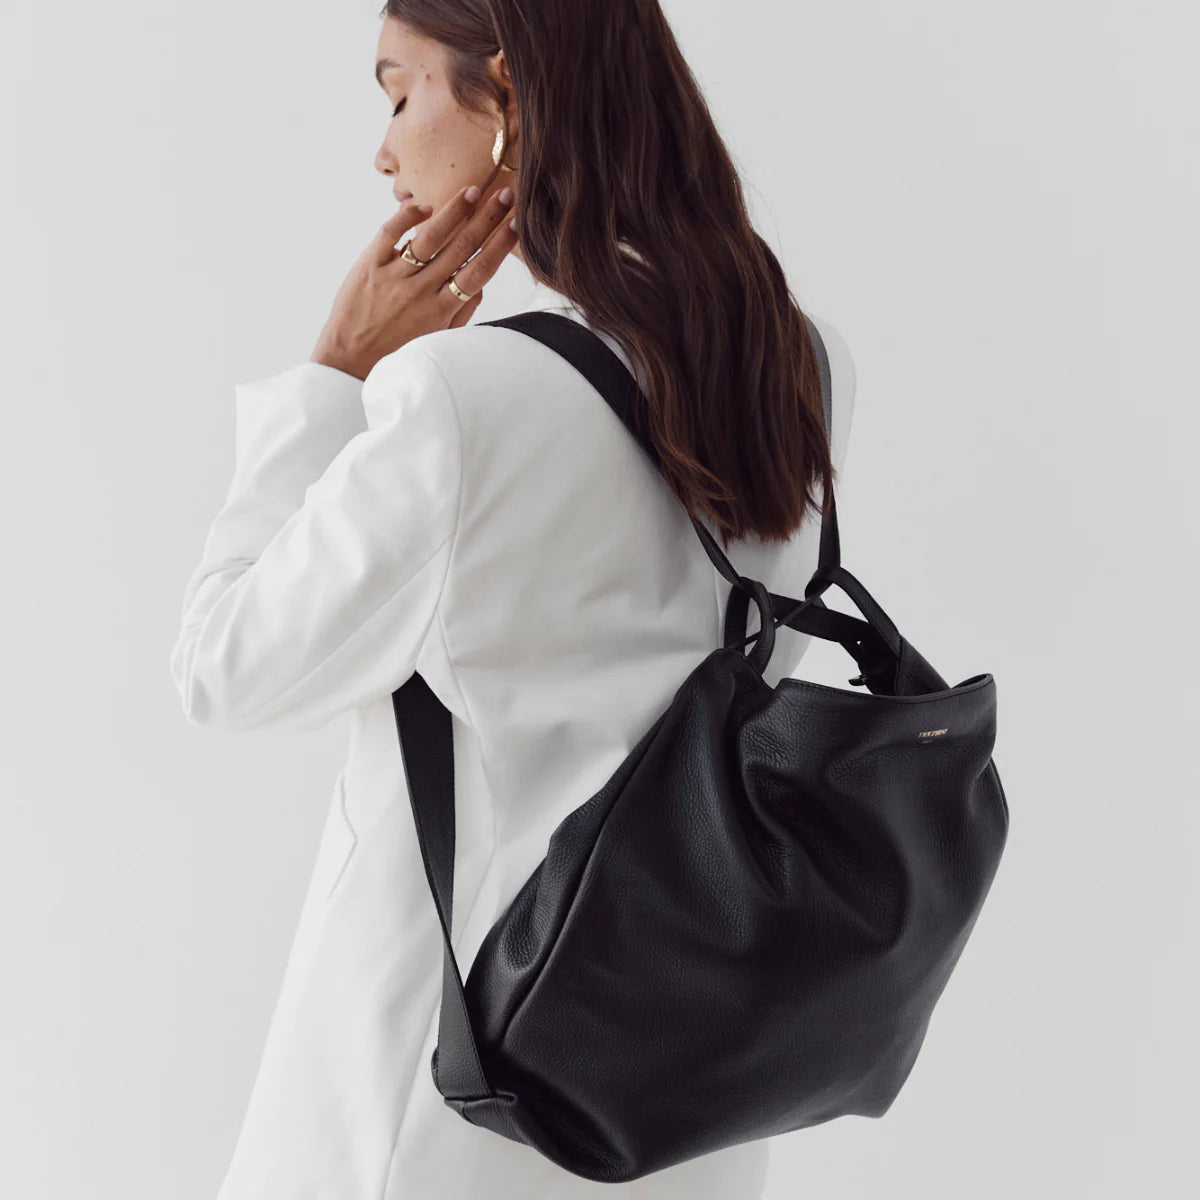 Bella XL 2-in-1 Convertible Backpack Tote - Black